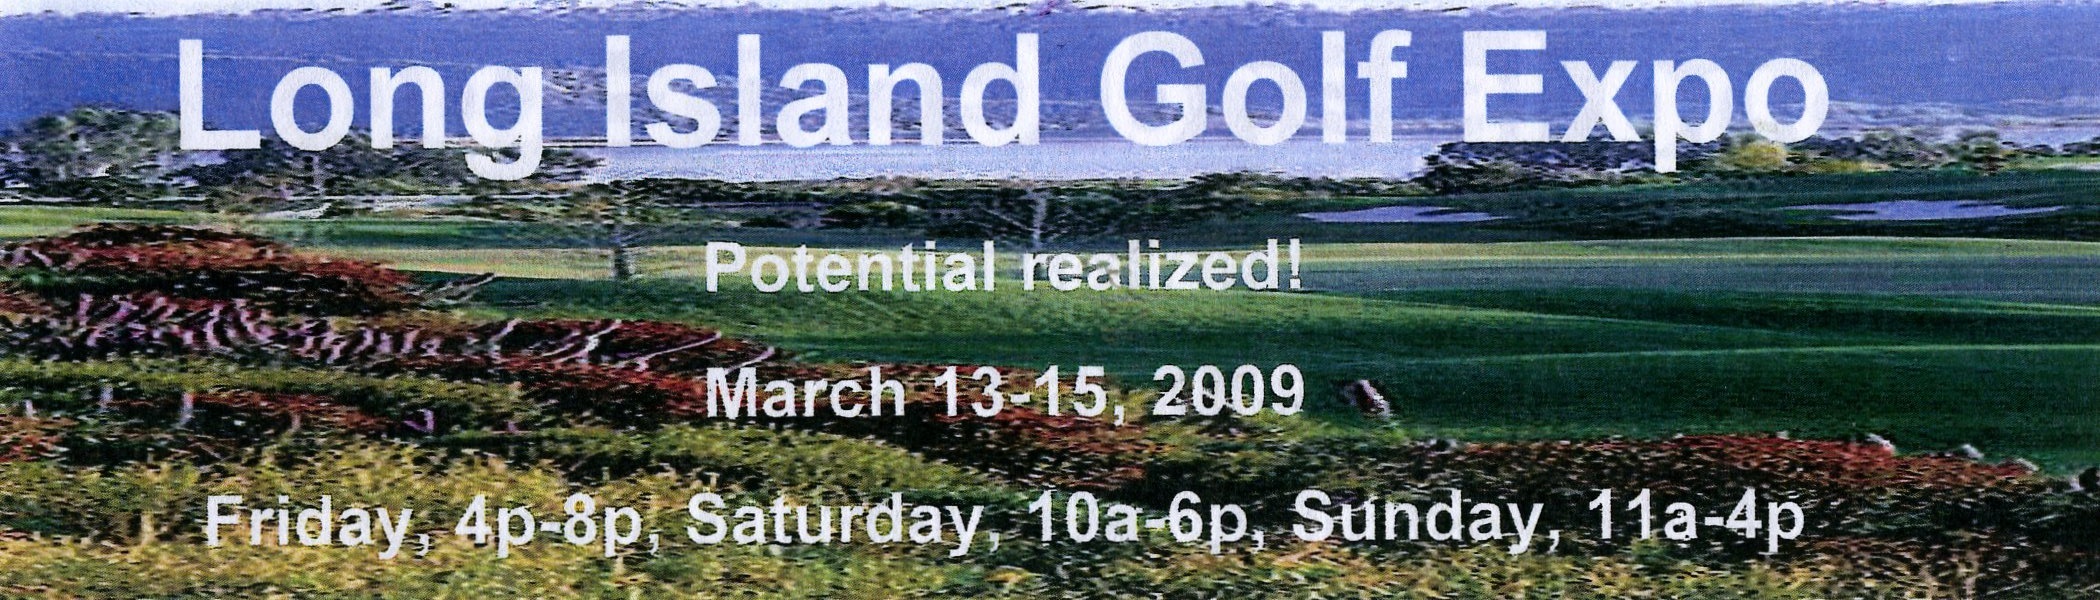 Long Island Golf Expo